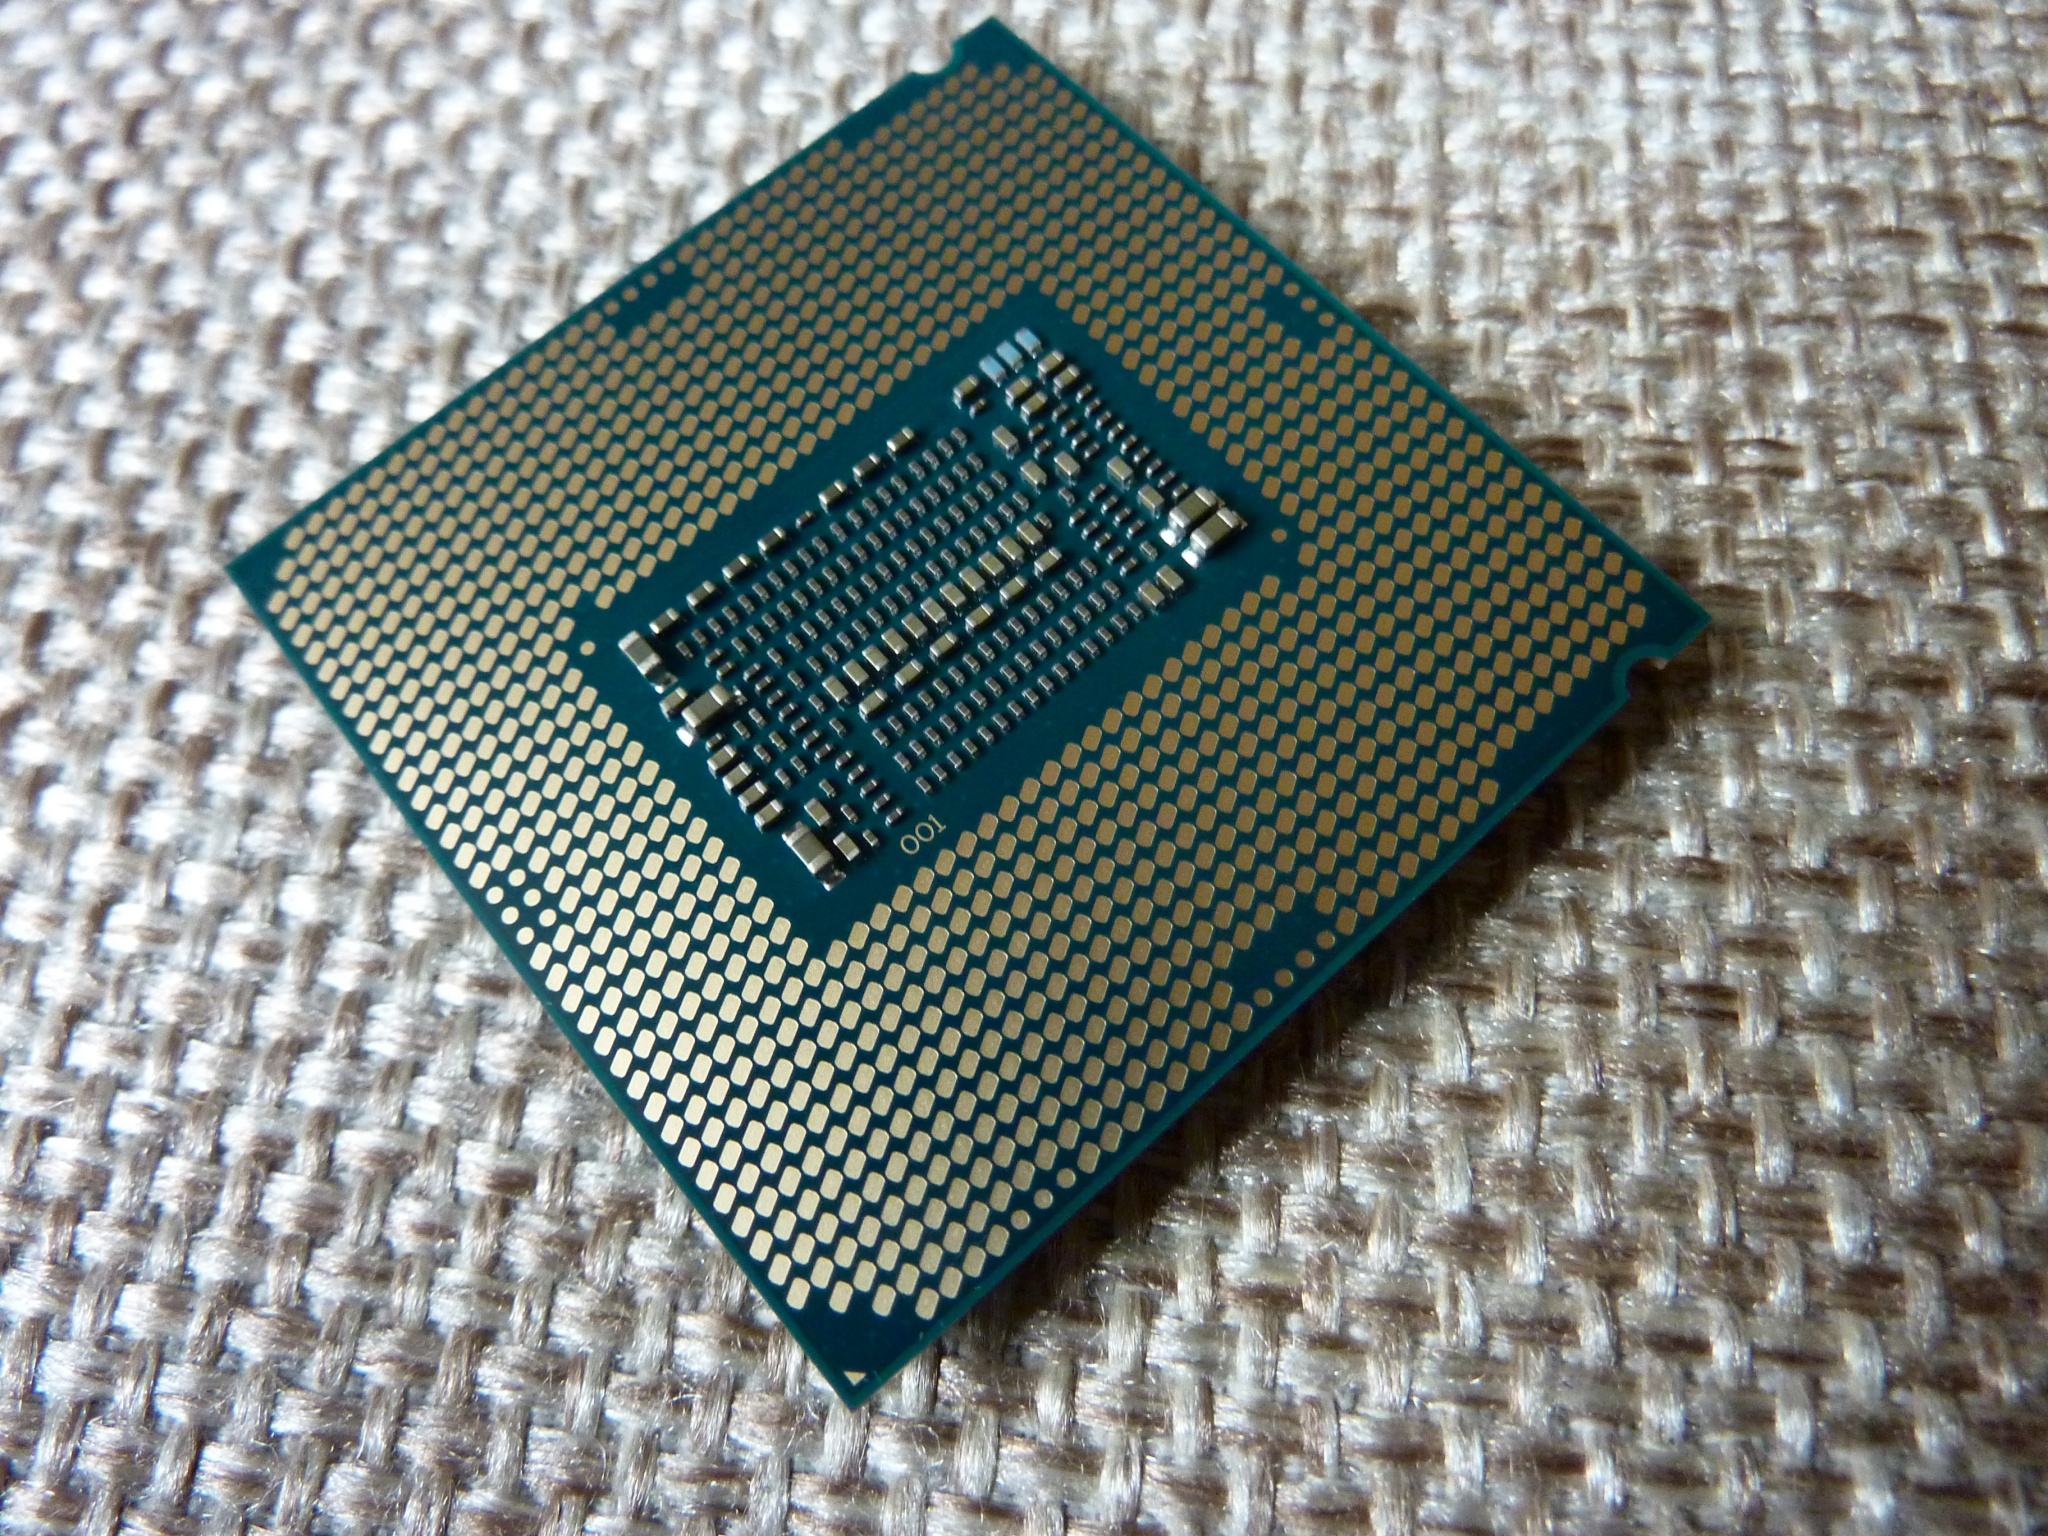 Сокет 1151 v1. I5 9400f. Core i5 9400. Процессор Intel Core i5-9400f. Процессор Intel Core i5-9400 OEM.